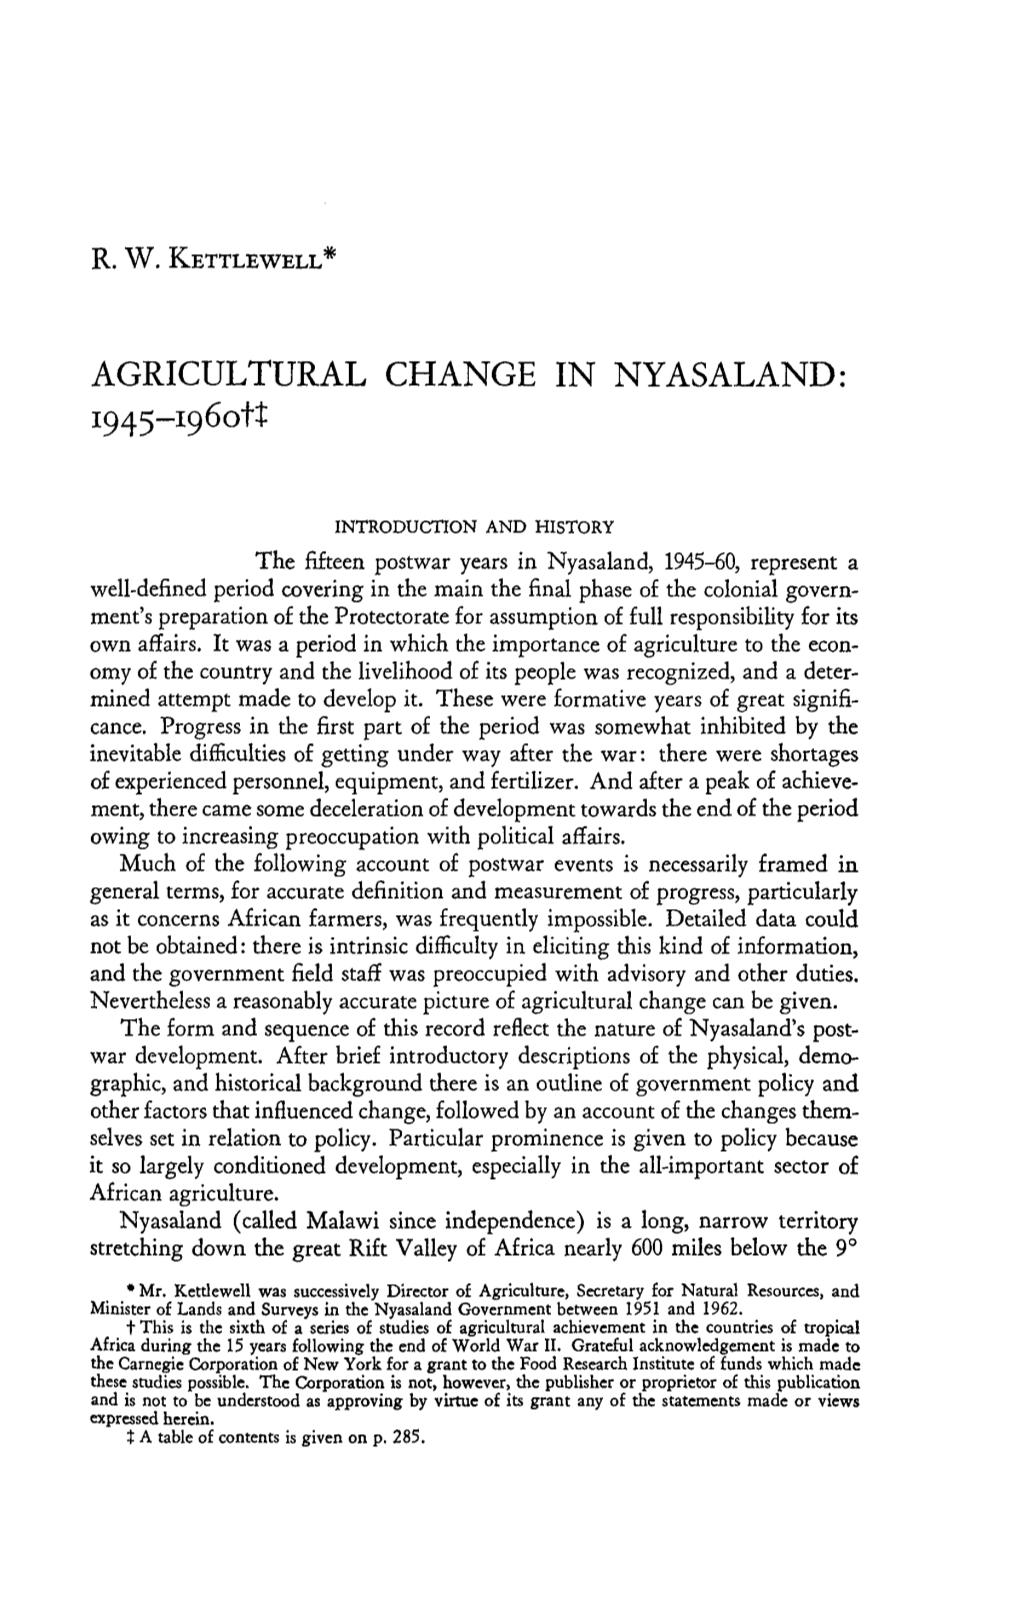 Agricultural Change in Nyasaland: 1945-1960 235